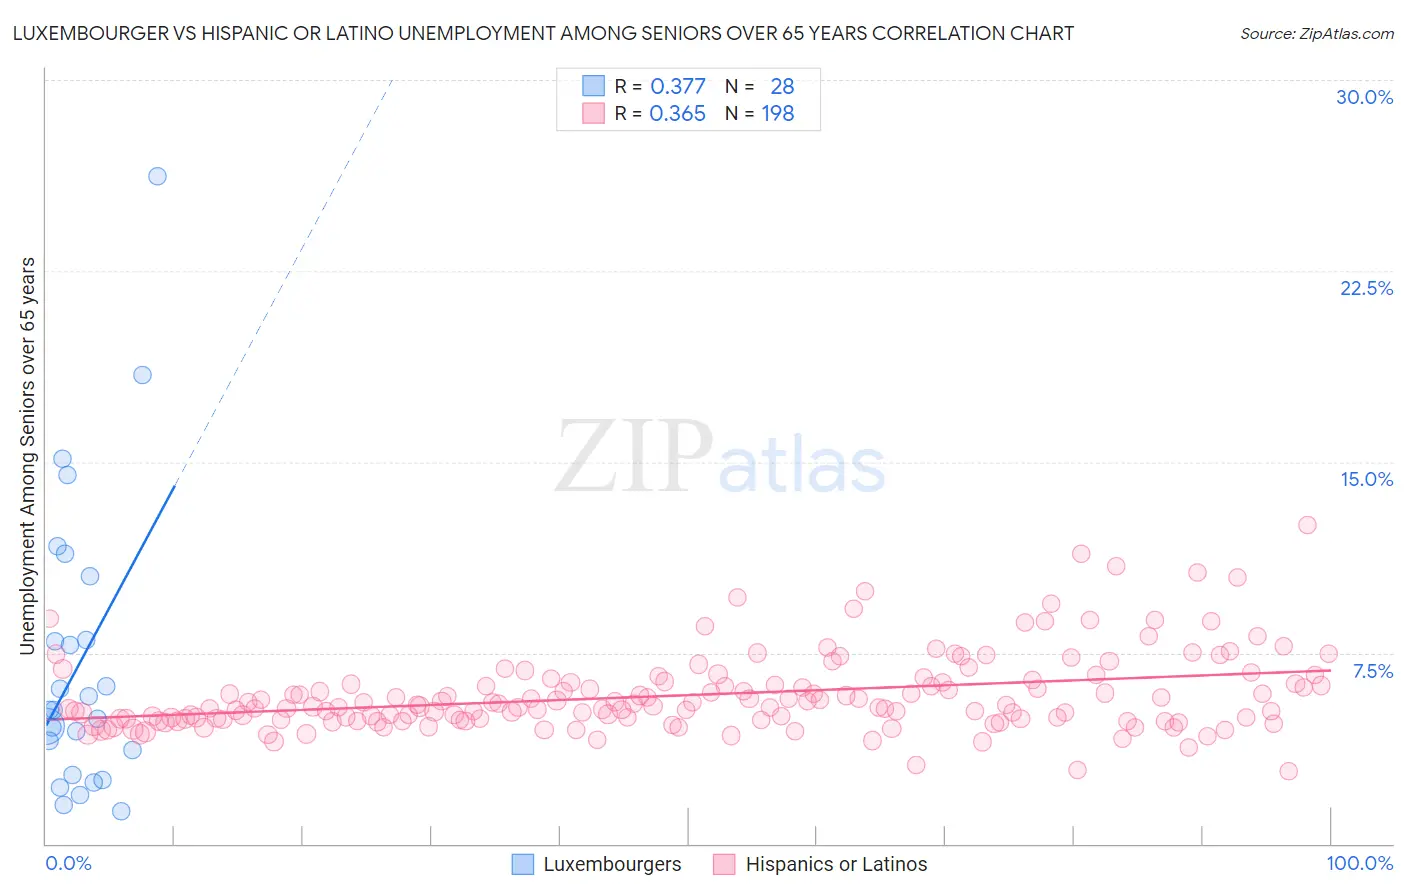 Luxembourger vs Hispanic or Latino Unemployment Among Seniors over 65 years